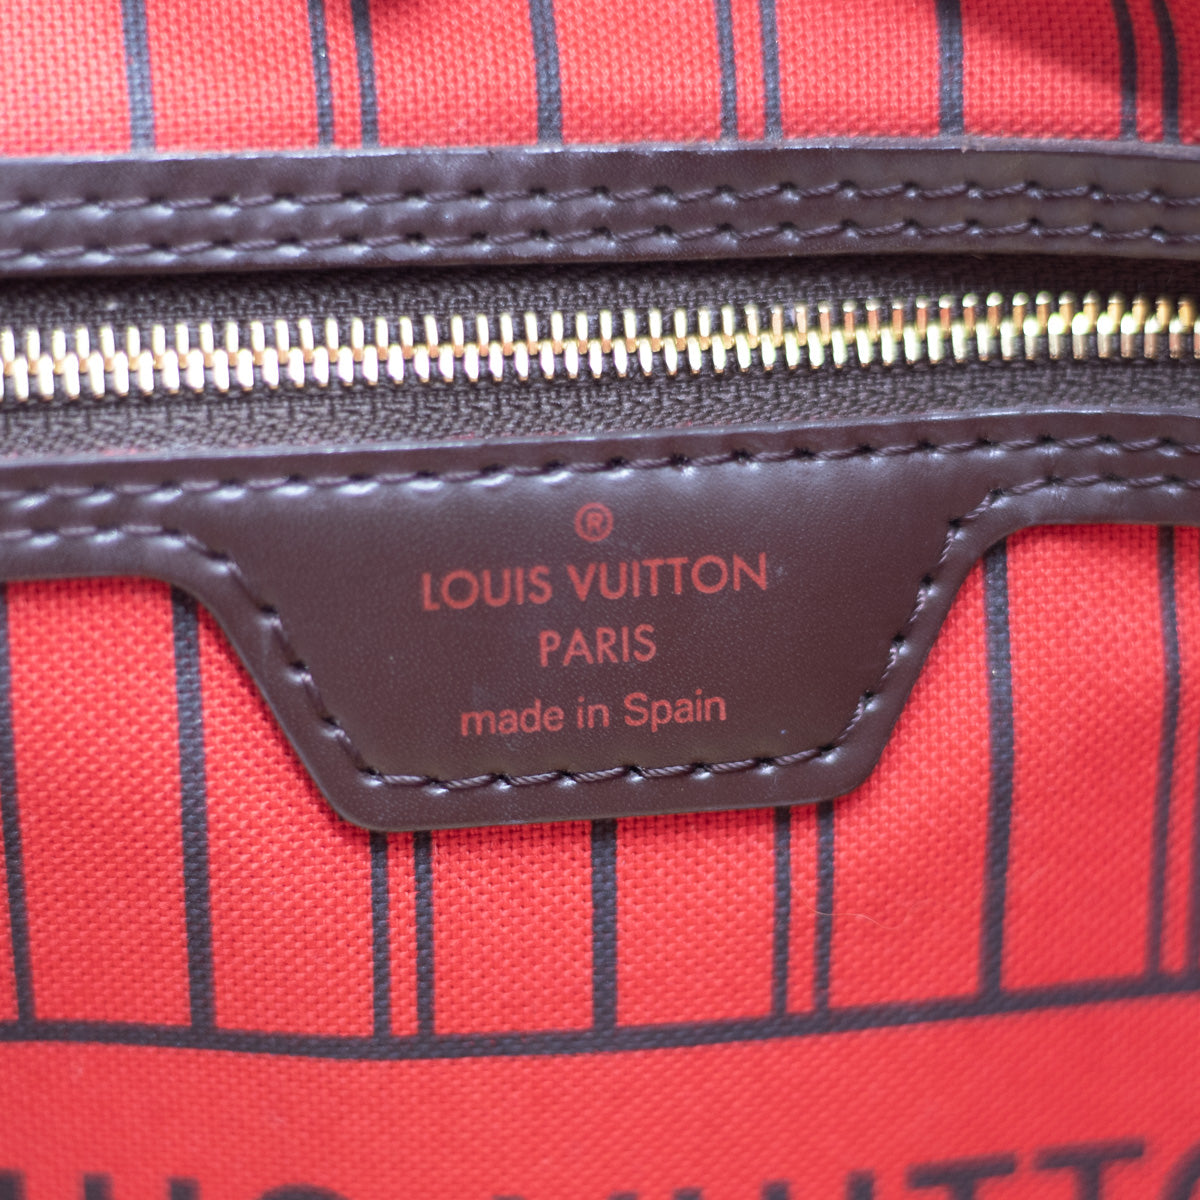 Louis Vuitton Neverfull MM Damier Ebene - THE PURSE AFFAIR